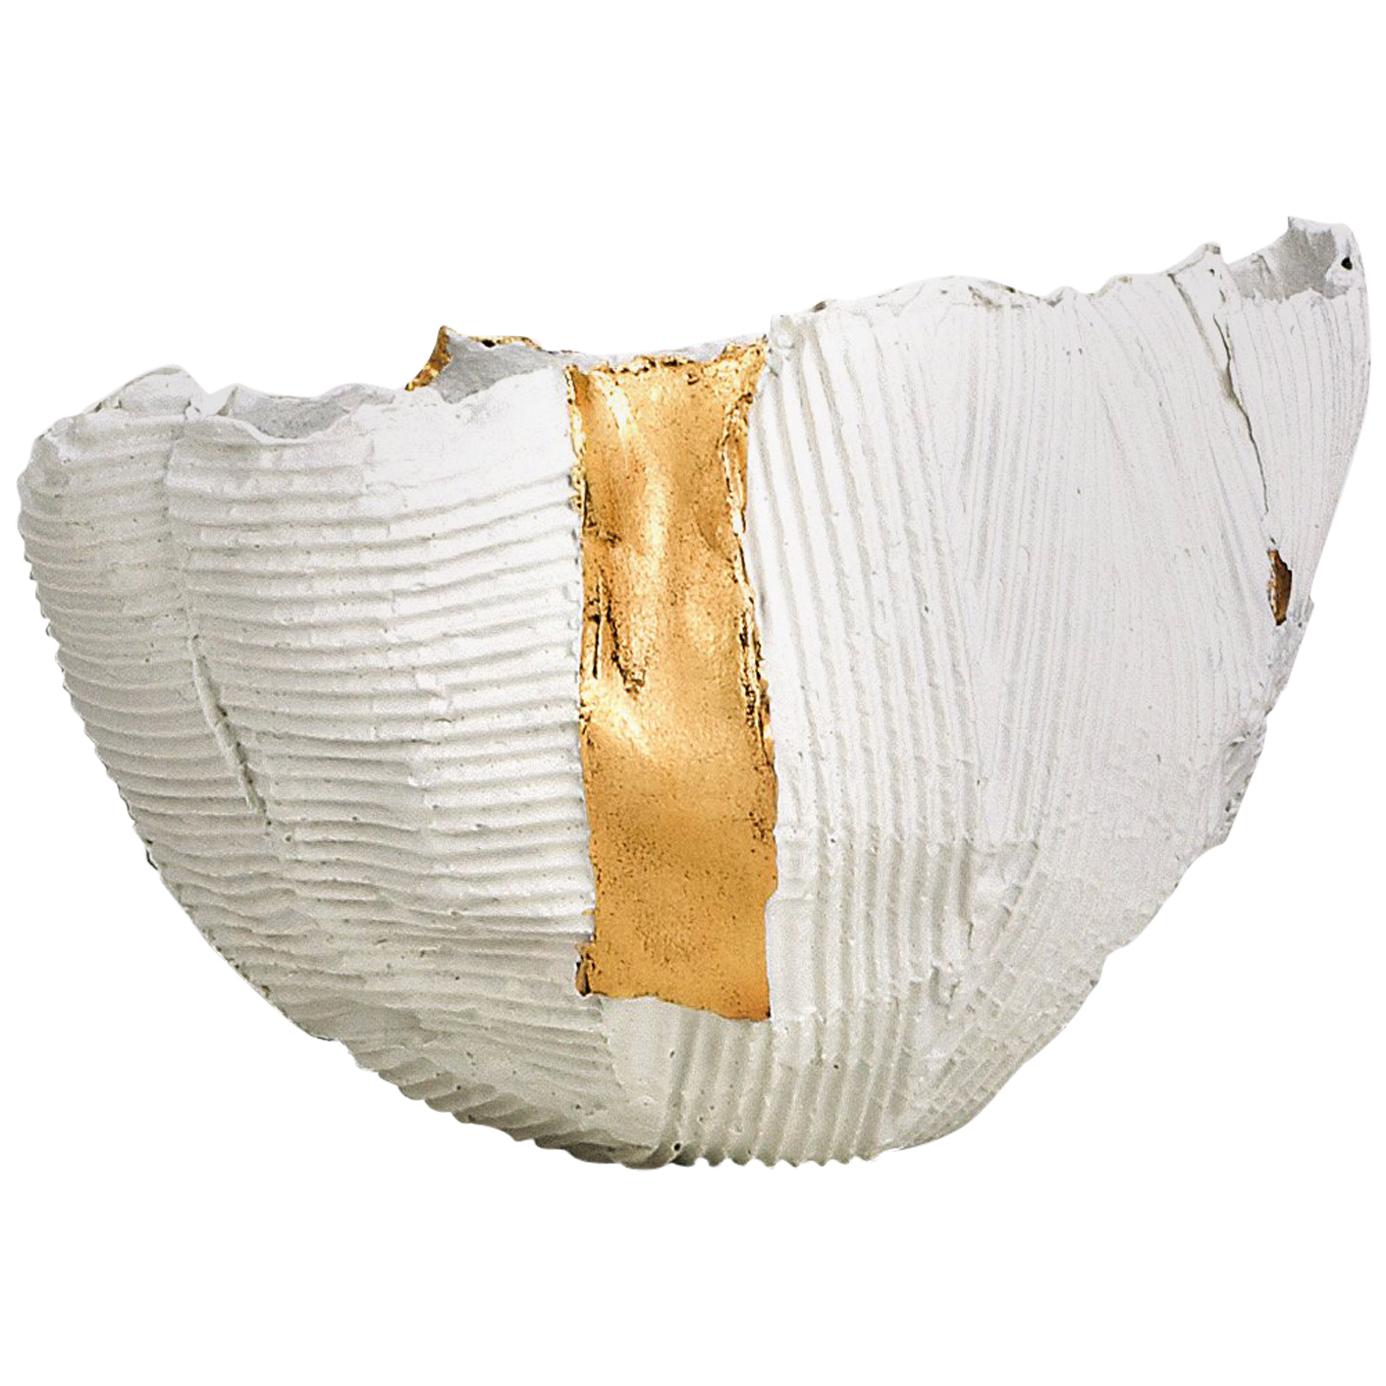 Bol en céramique contemporain Cartocci texturé blanc et or n° 2